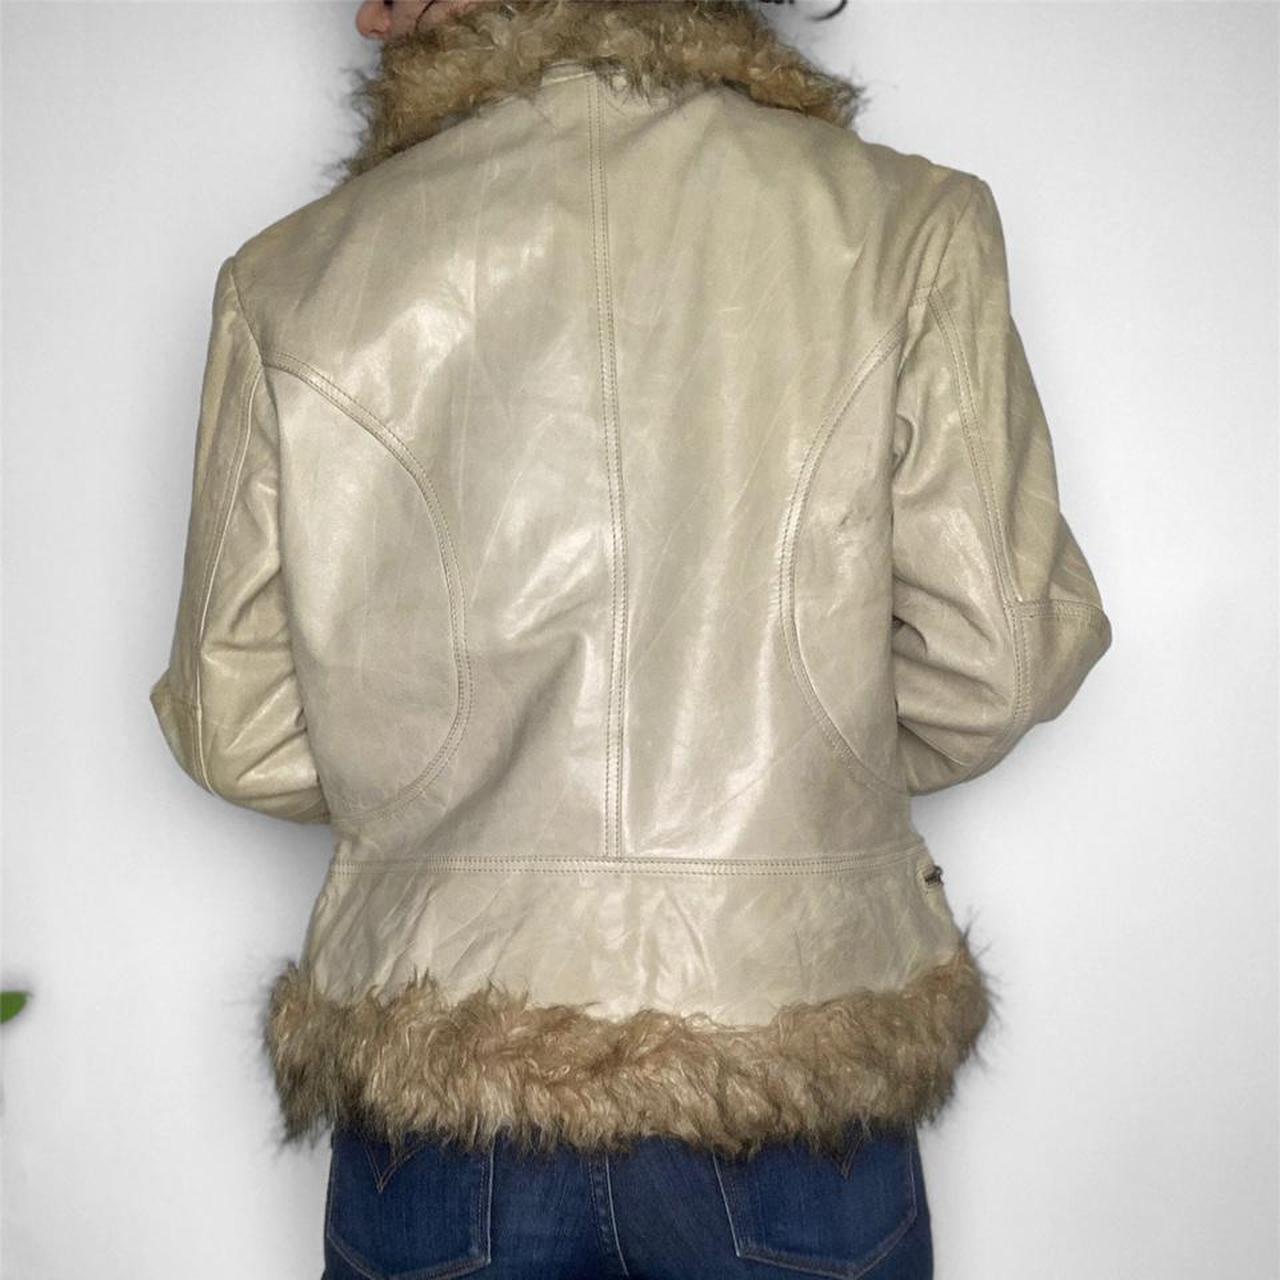 Deadstock vintage y2k cream leather and fur Afghan style jacket